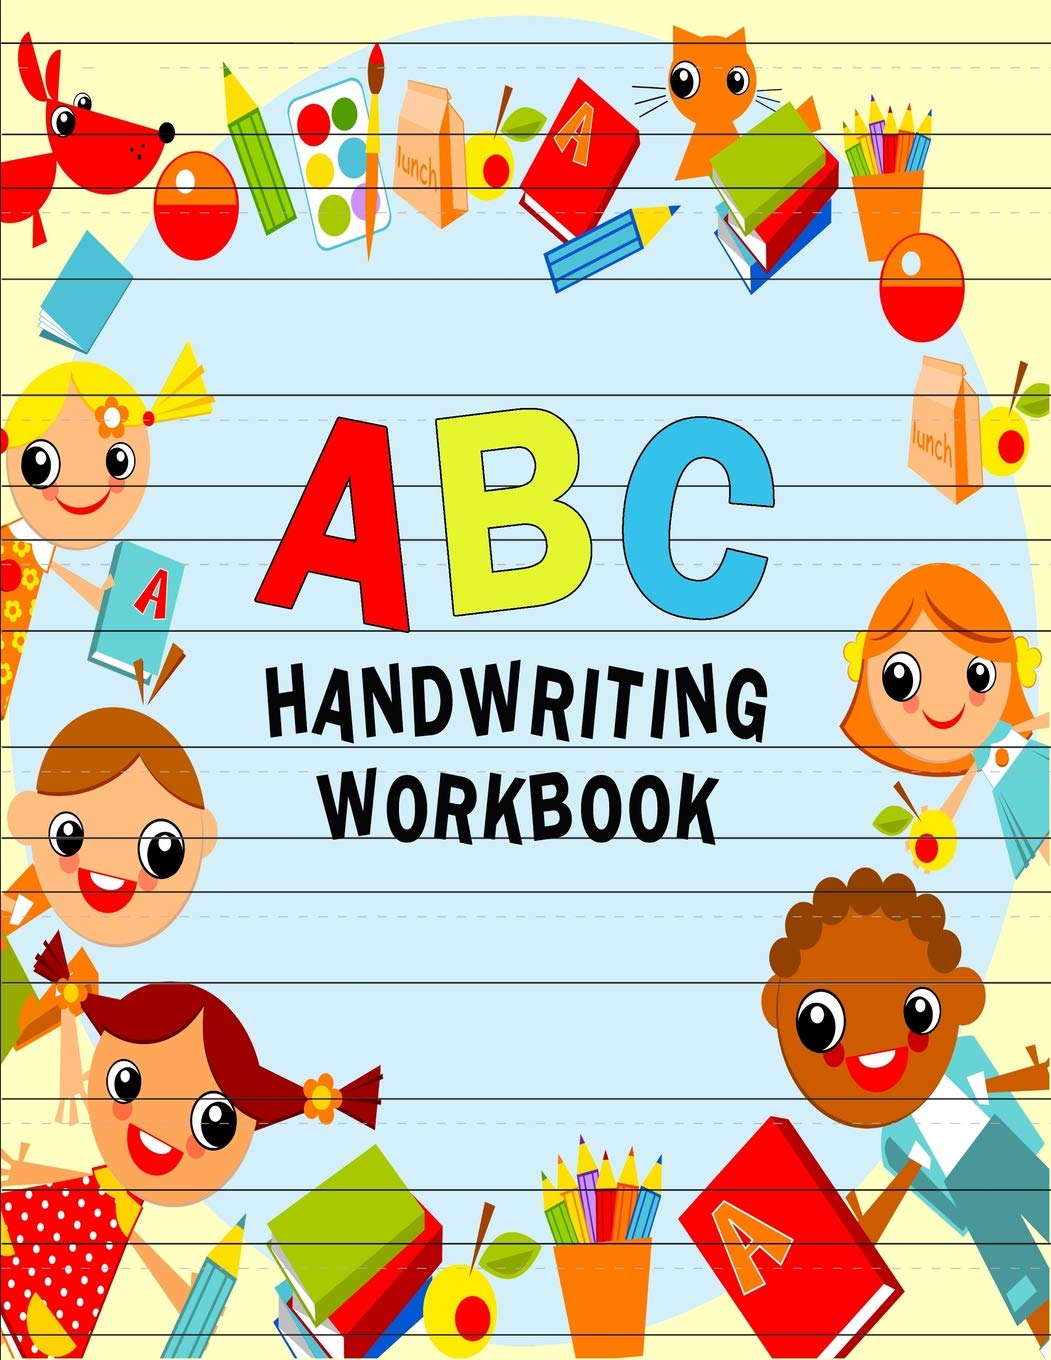 Abc handwriting workbook.